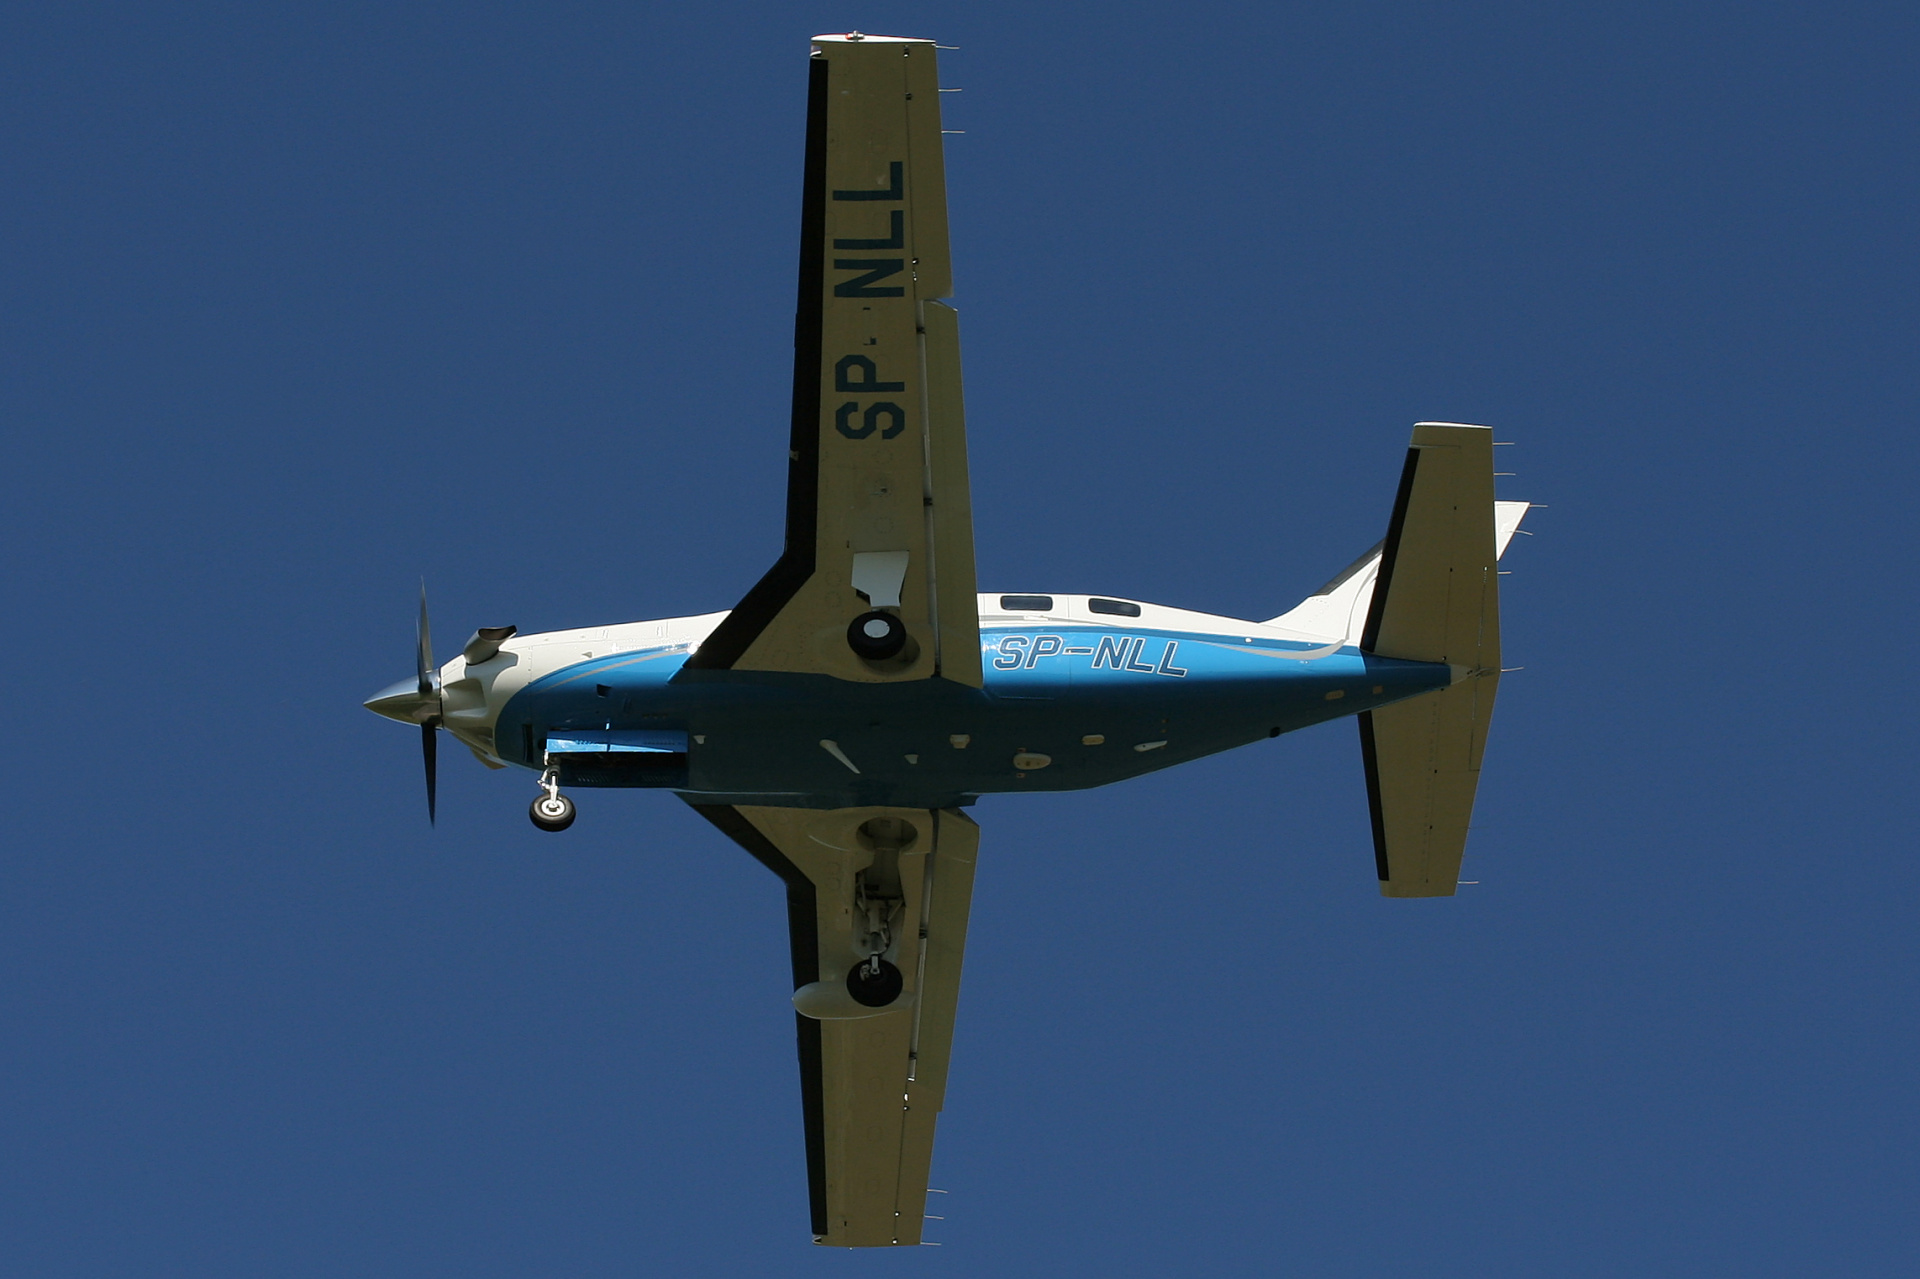 SP-NLL, private (Aircraft » EPWA Spotting » Piper PA-46 Malibu Meridian)